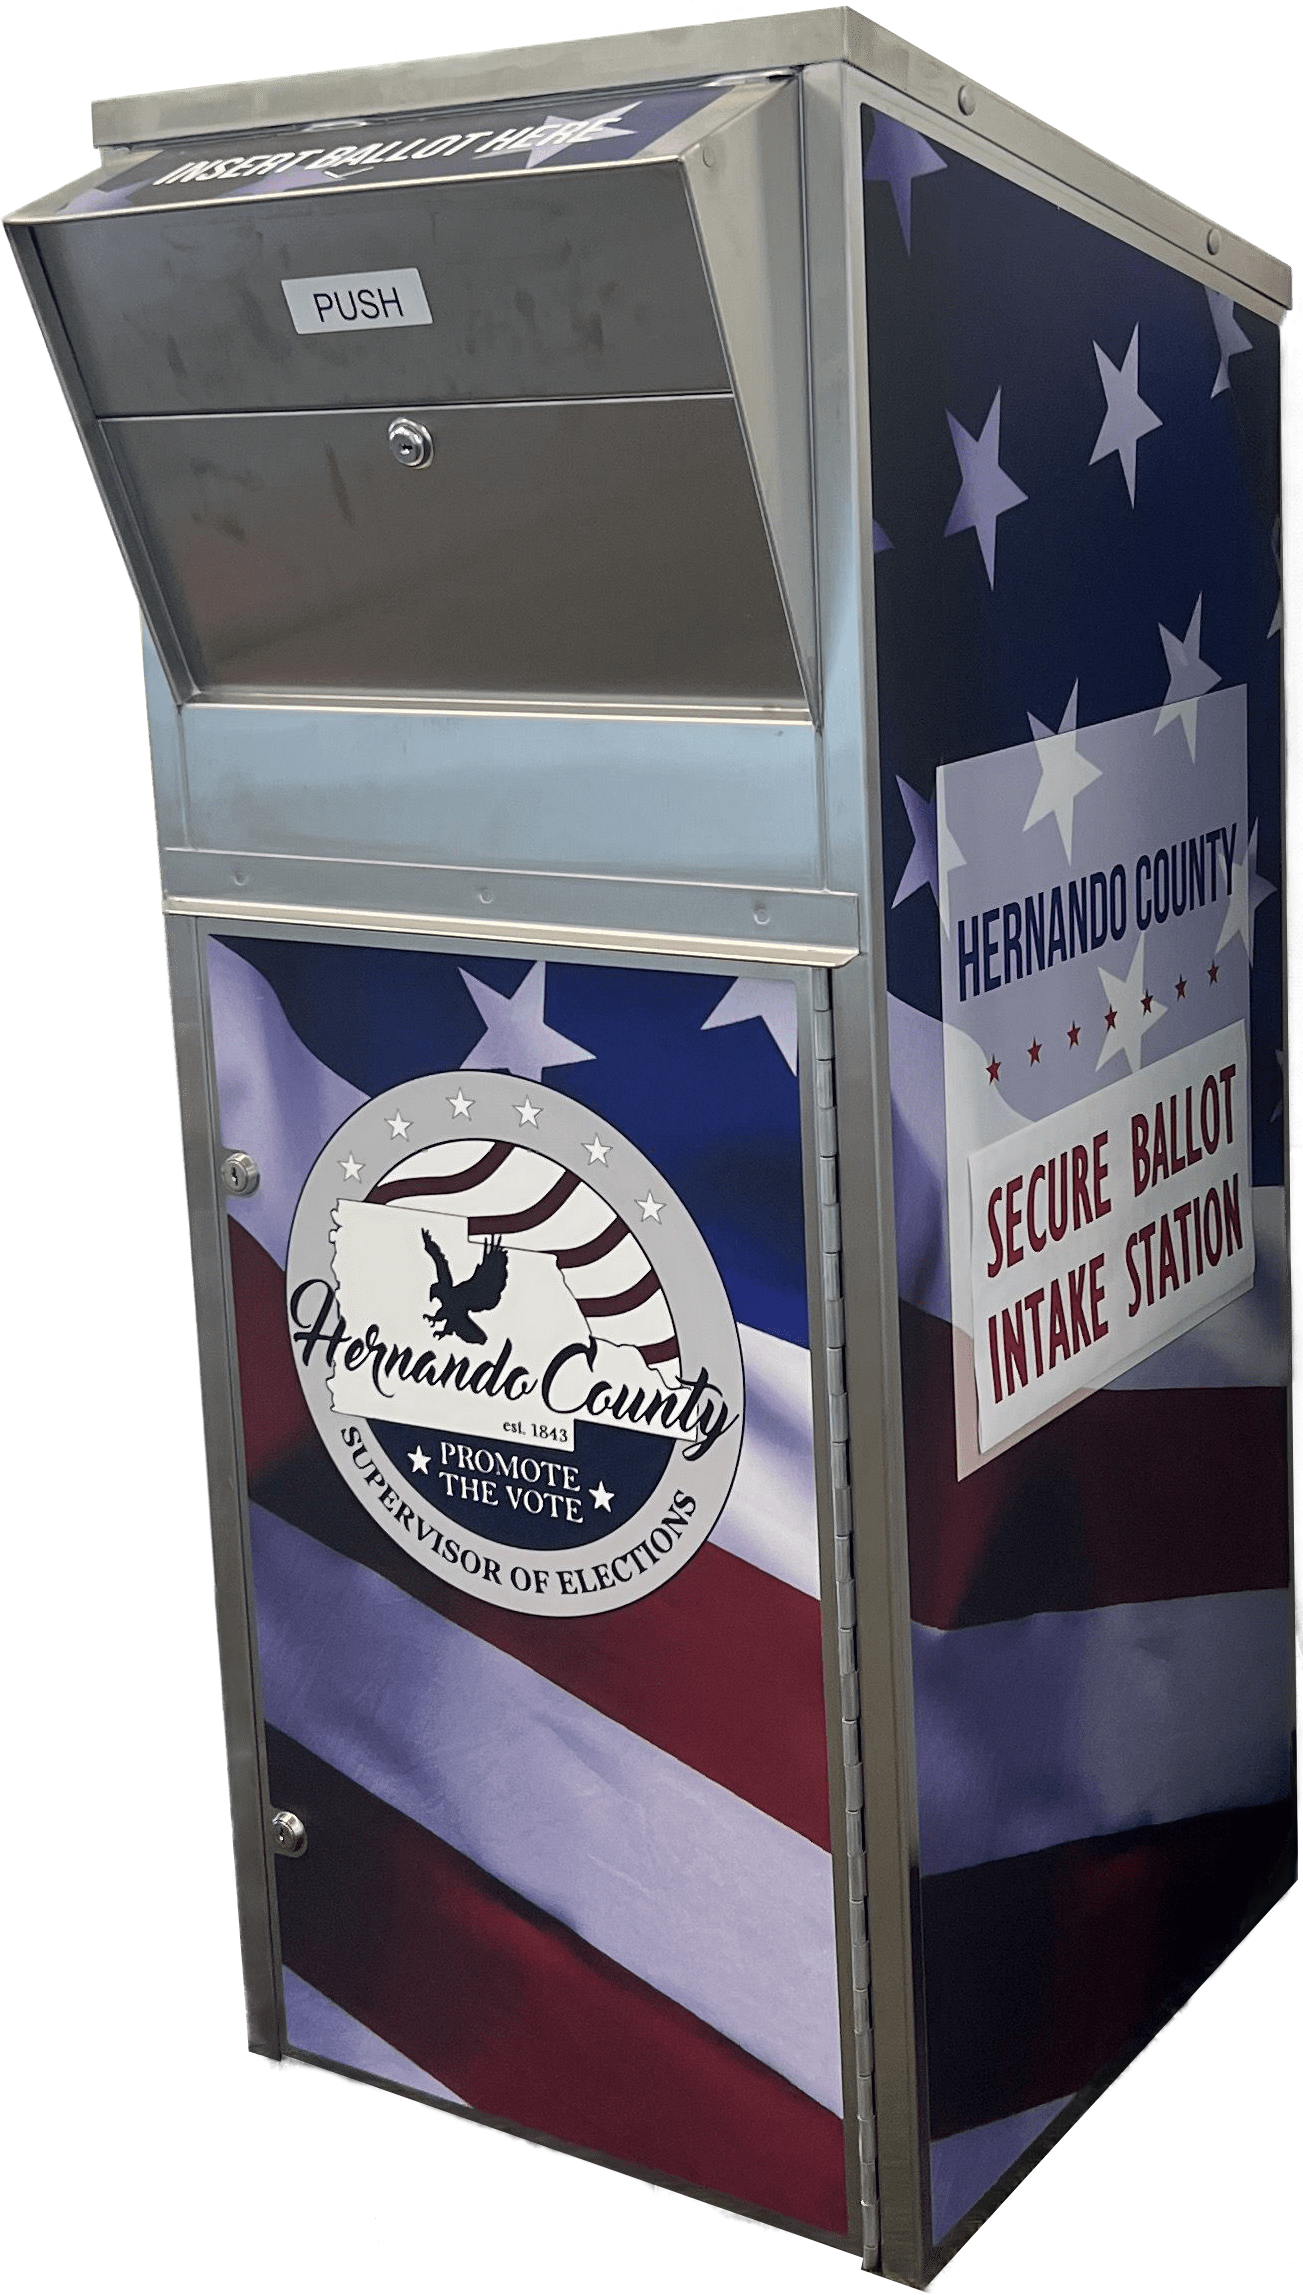 a secure ballot intake station